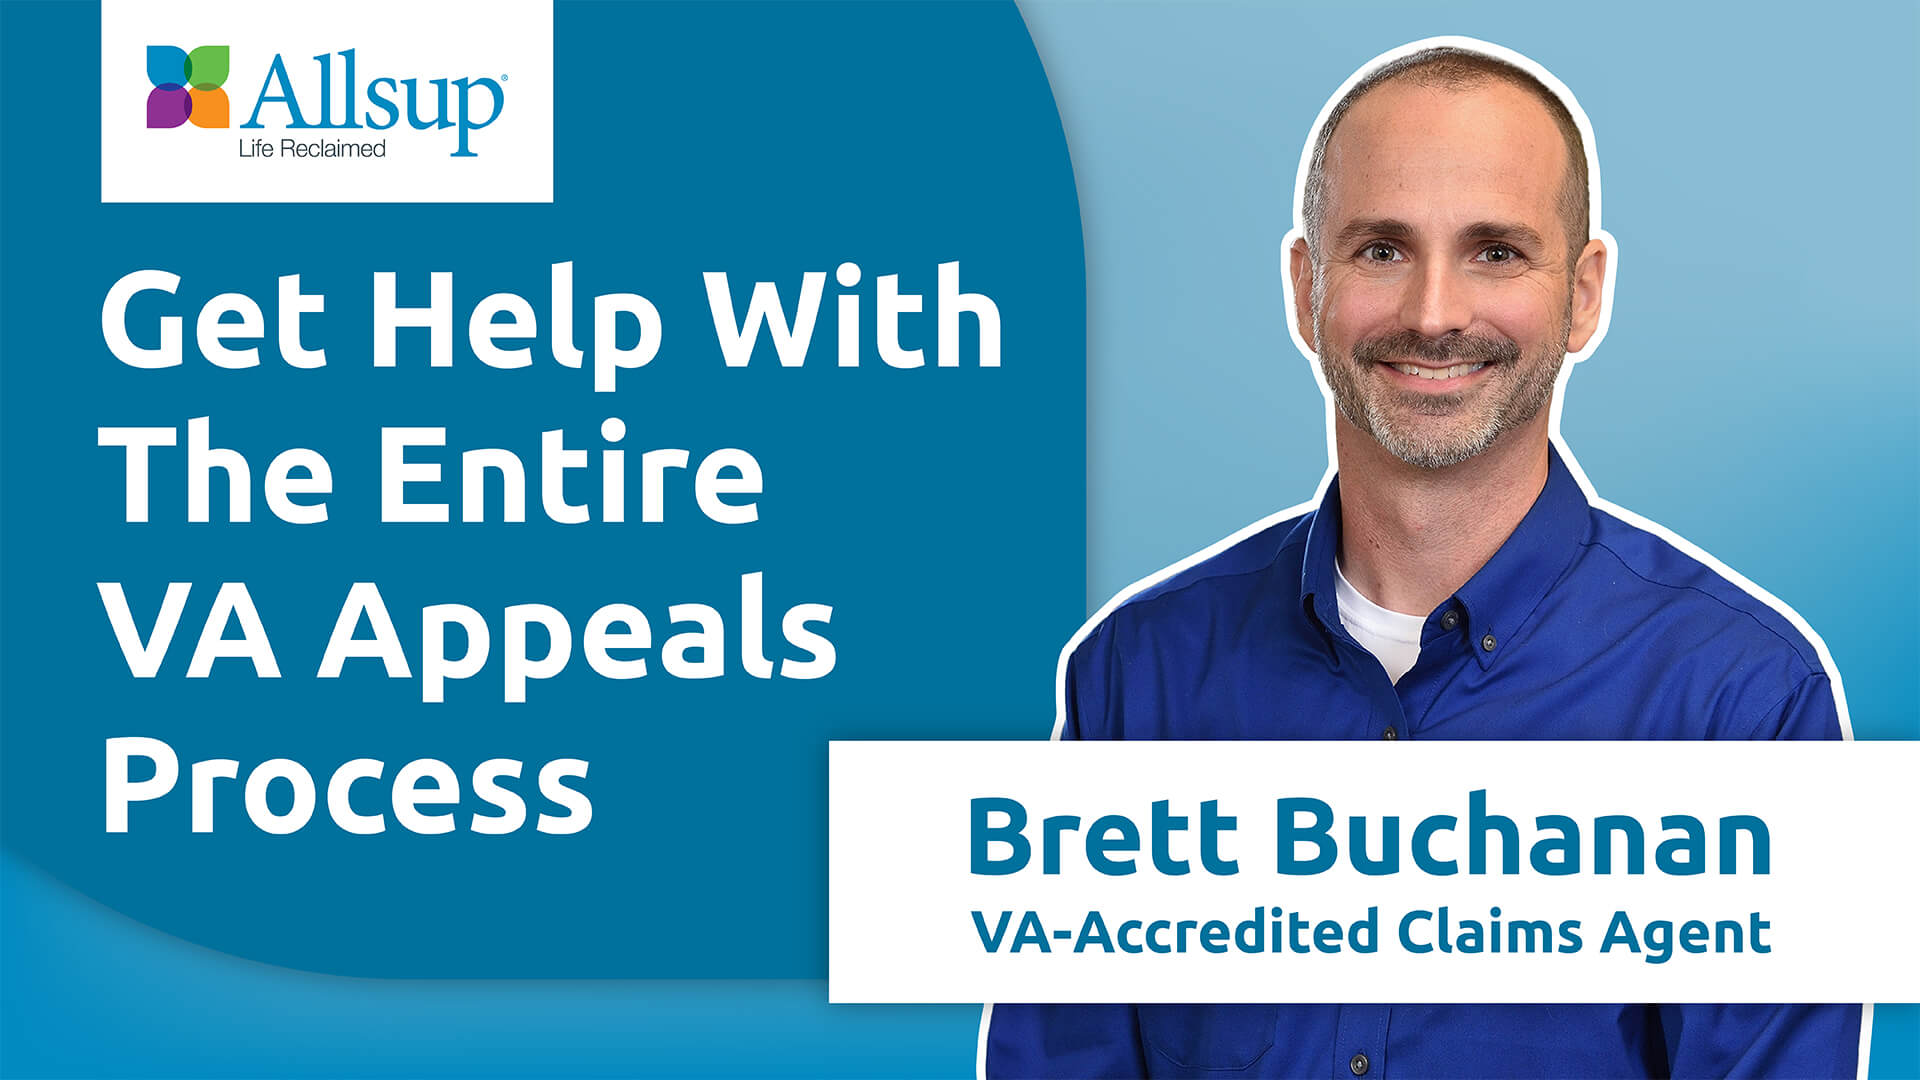 Brett Buchanan, Army veteran and VA-accredited Claims Agent